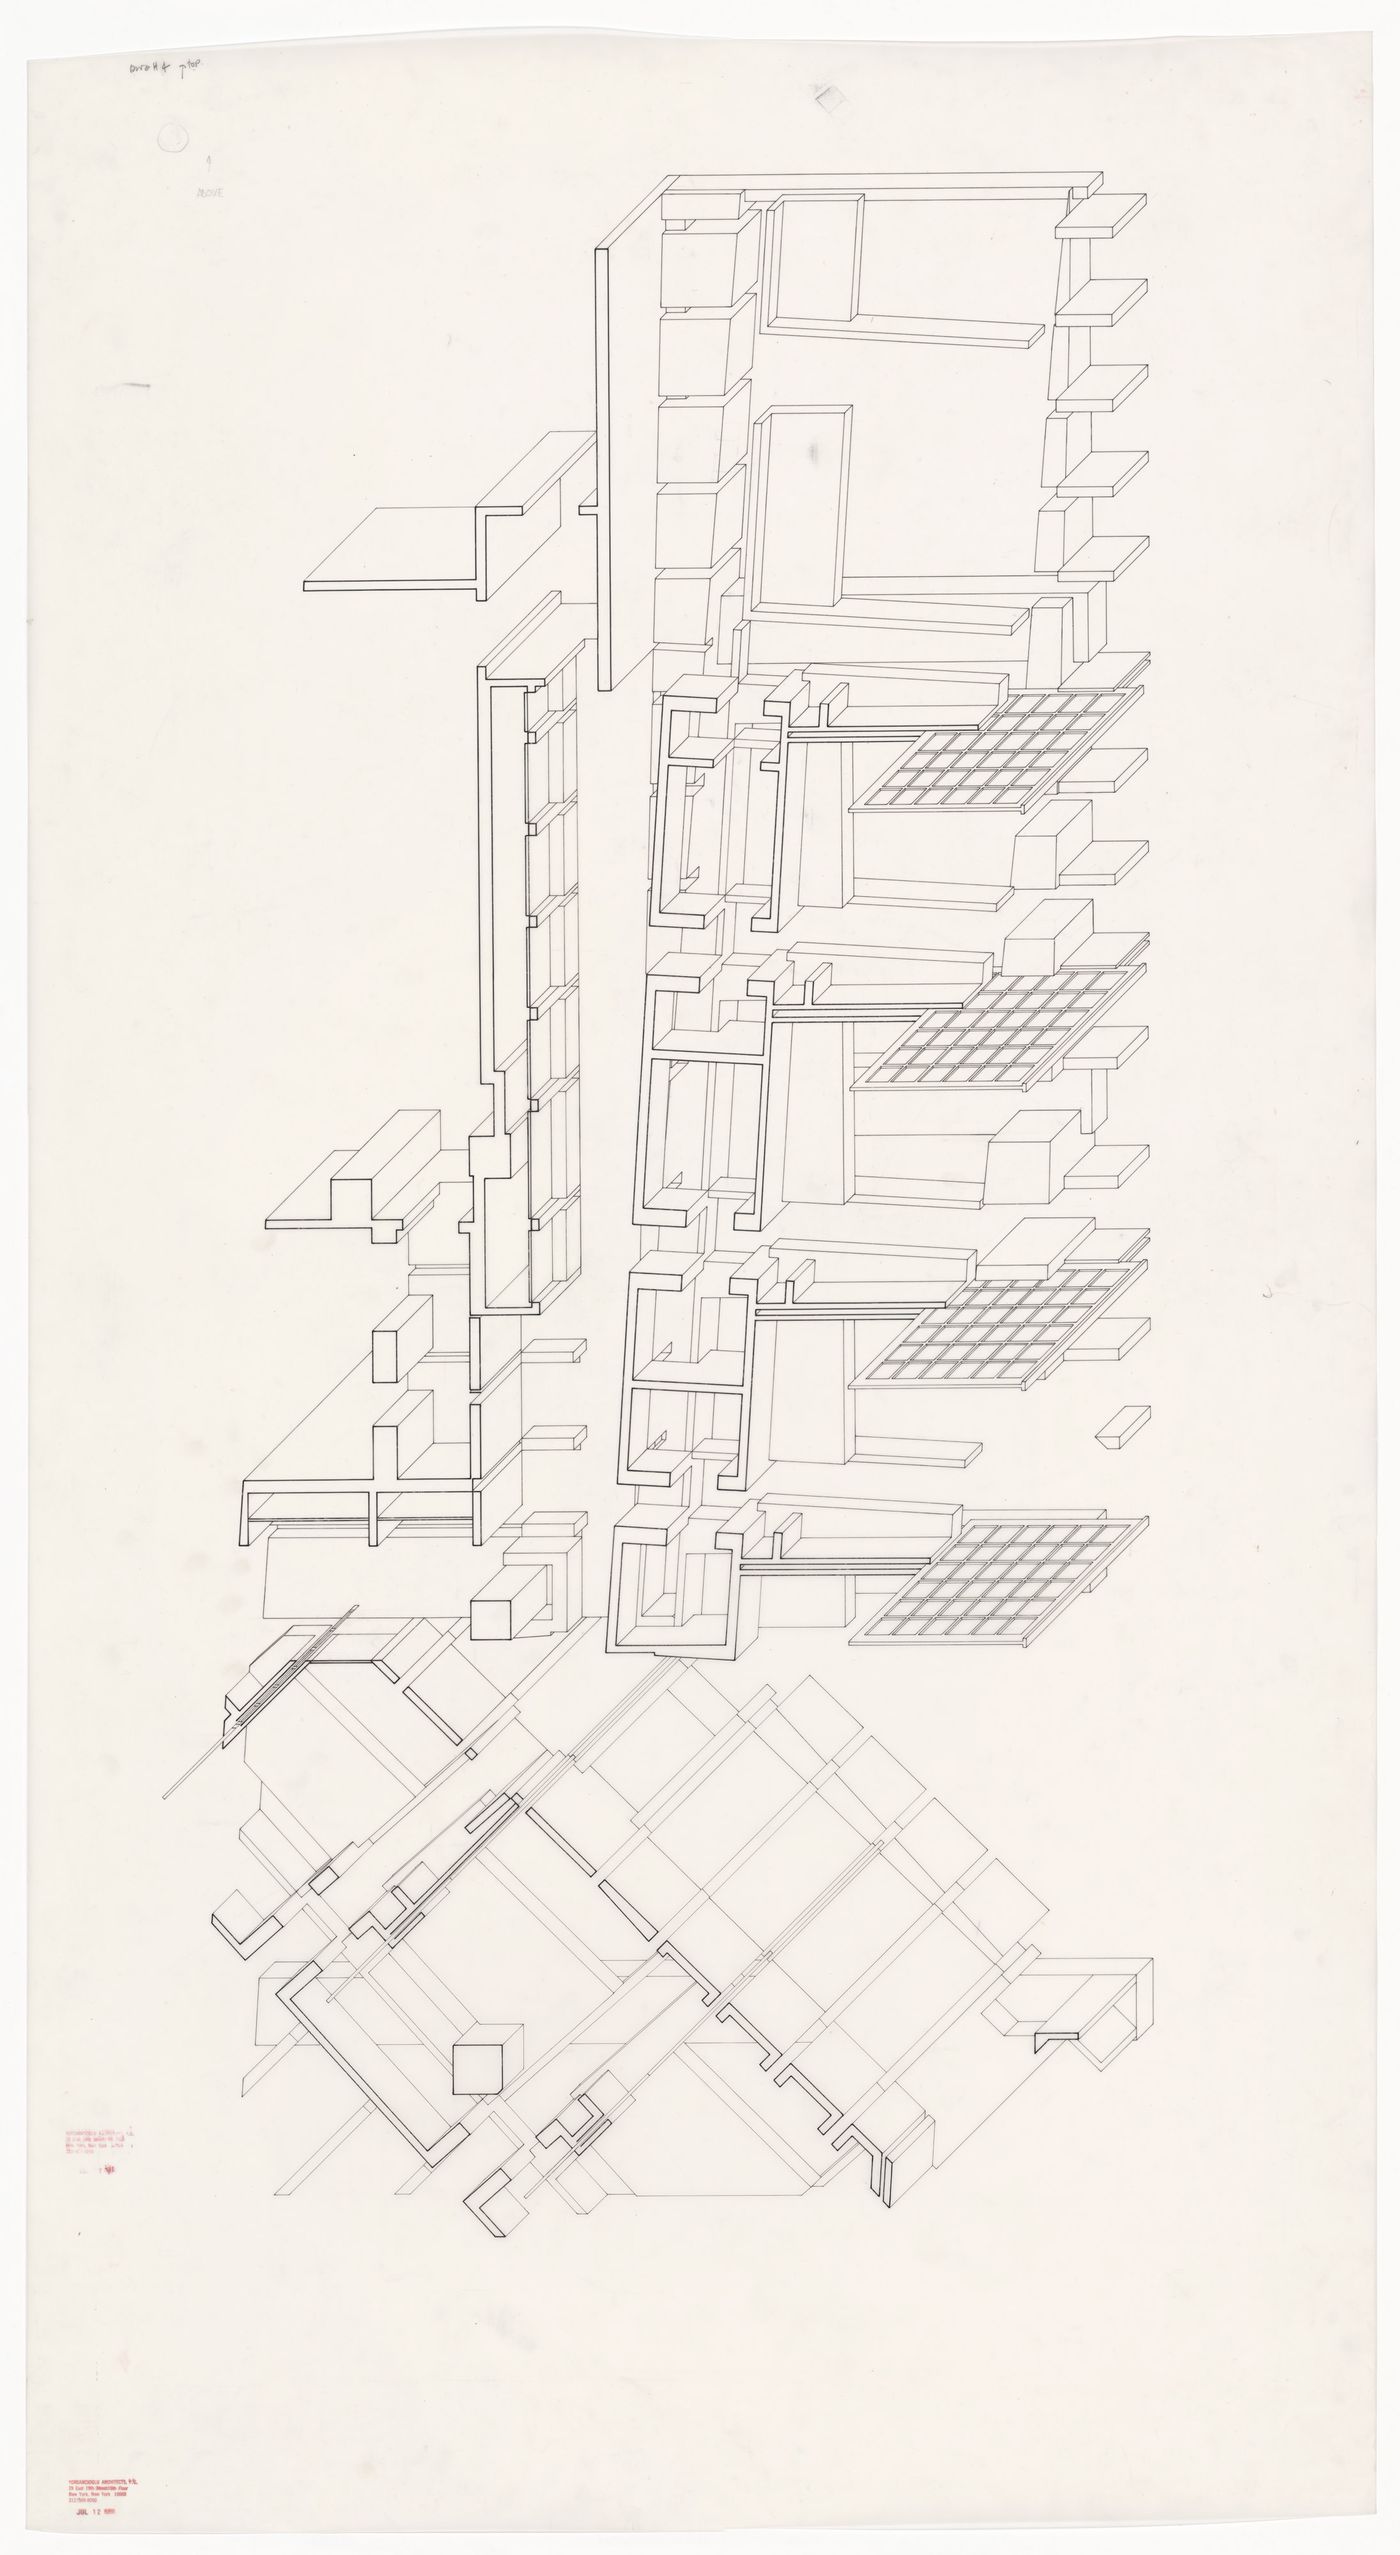 Cavalier oblique drawing for Fuller Toms Loft, New York, USA